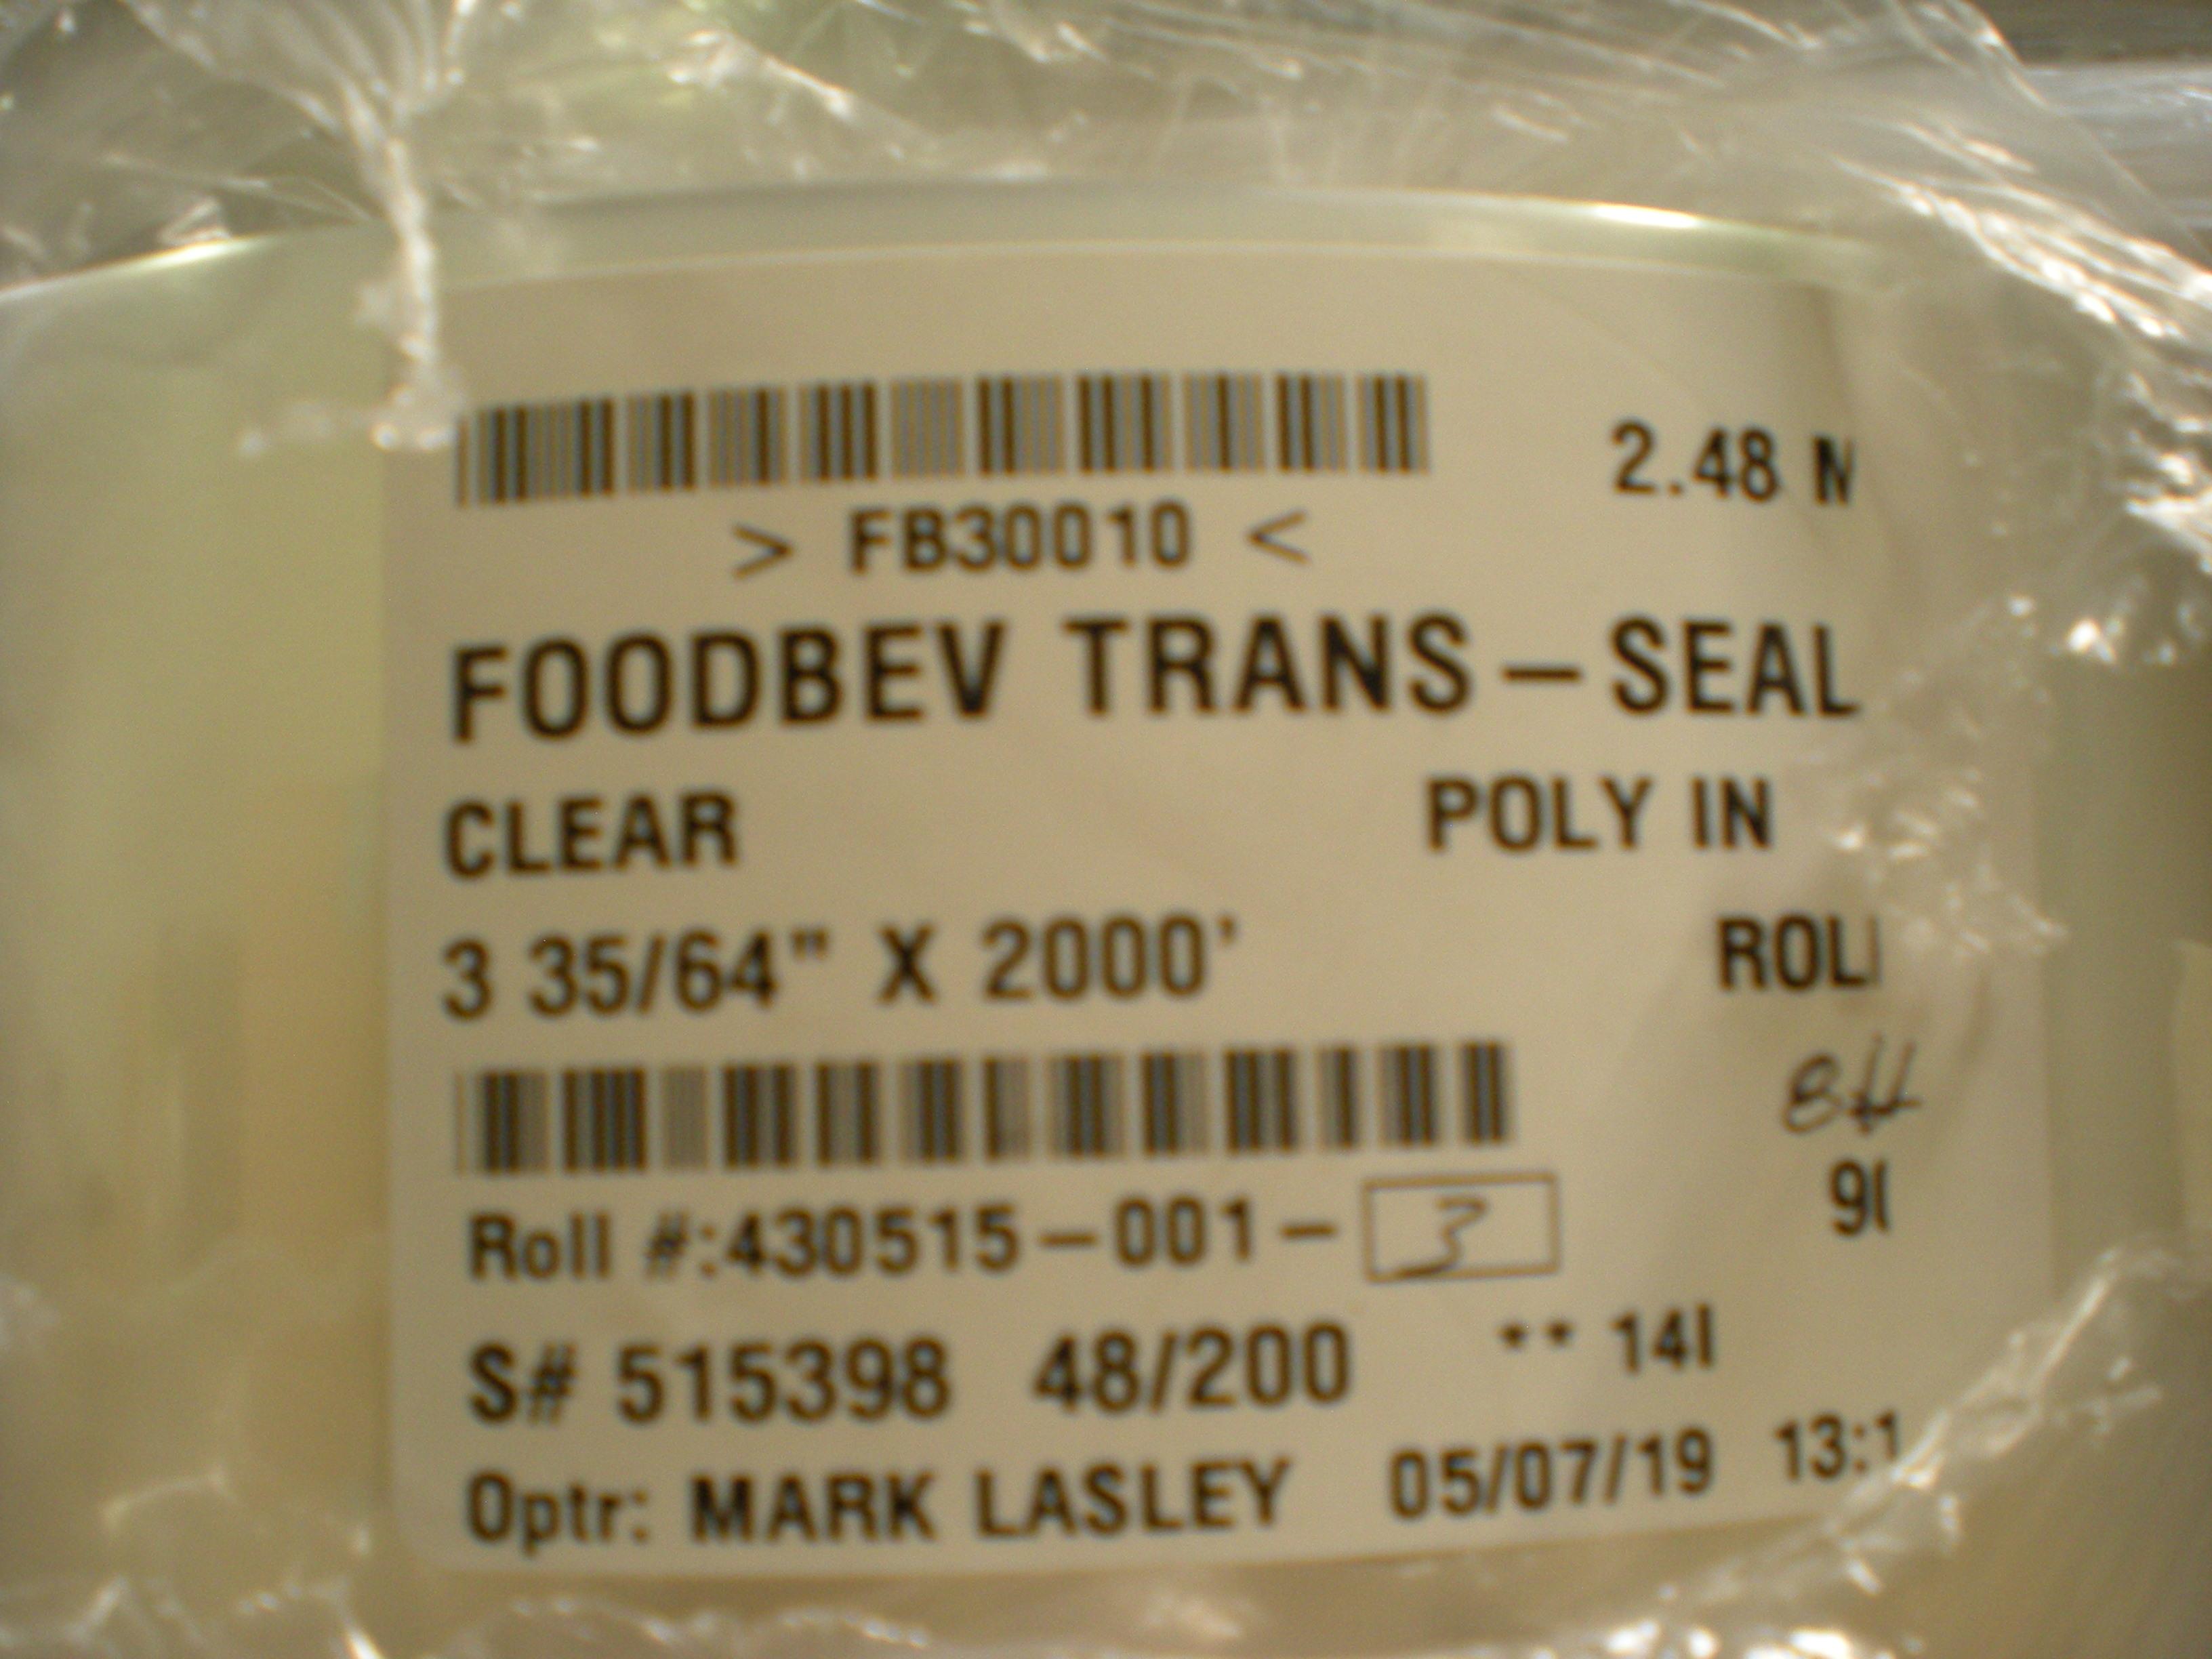 FoodBev Trans Seal 3 35/64" x 2000',  clear,approx 67 rolls